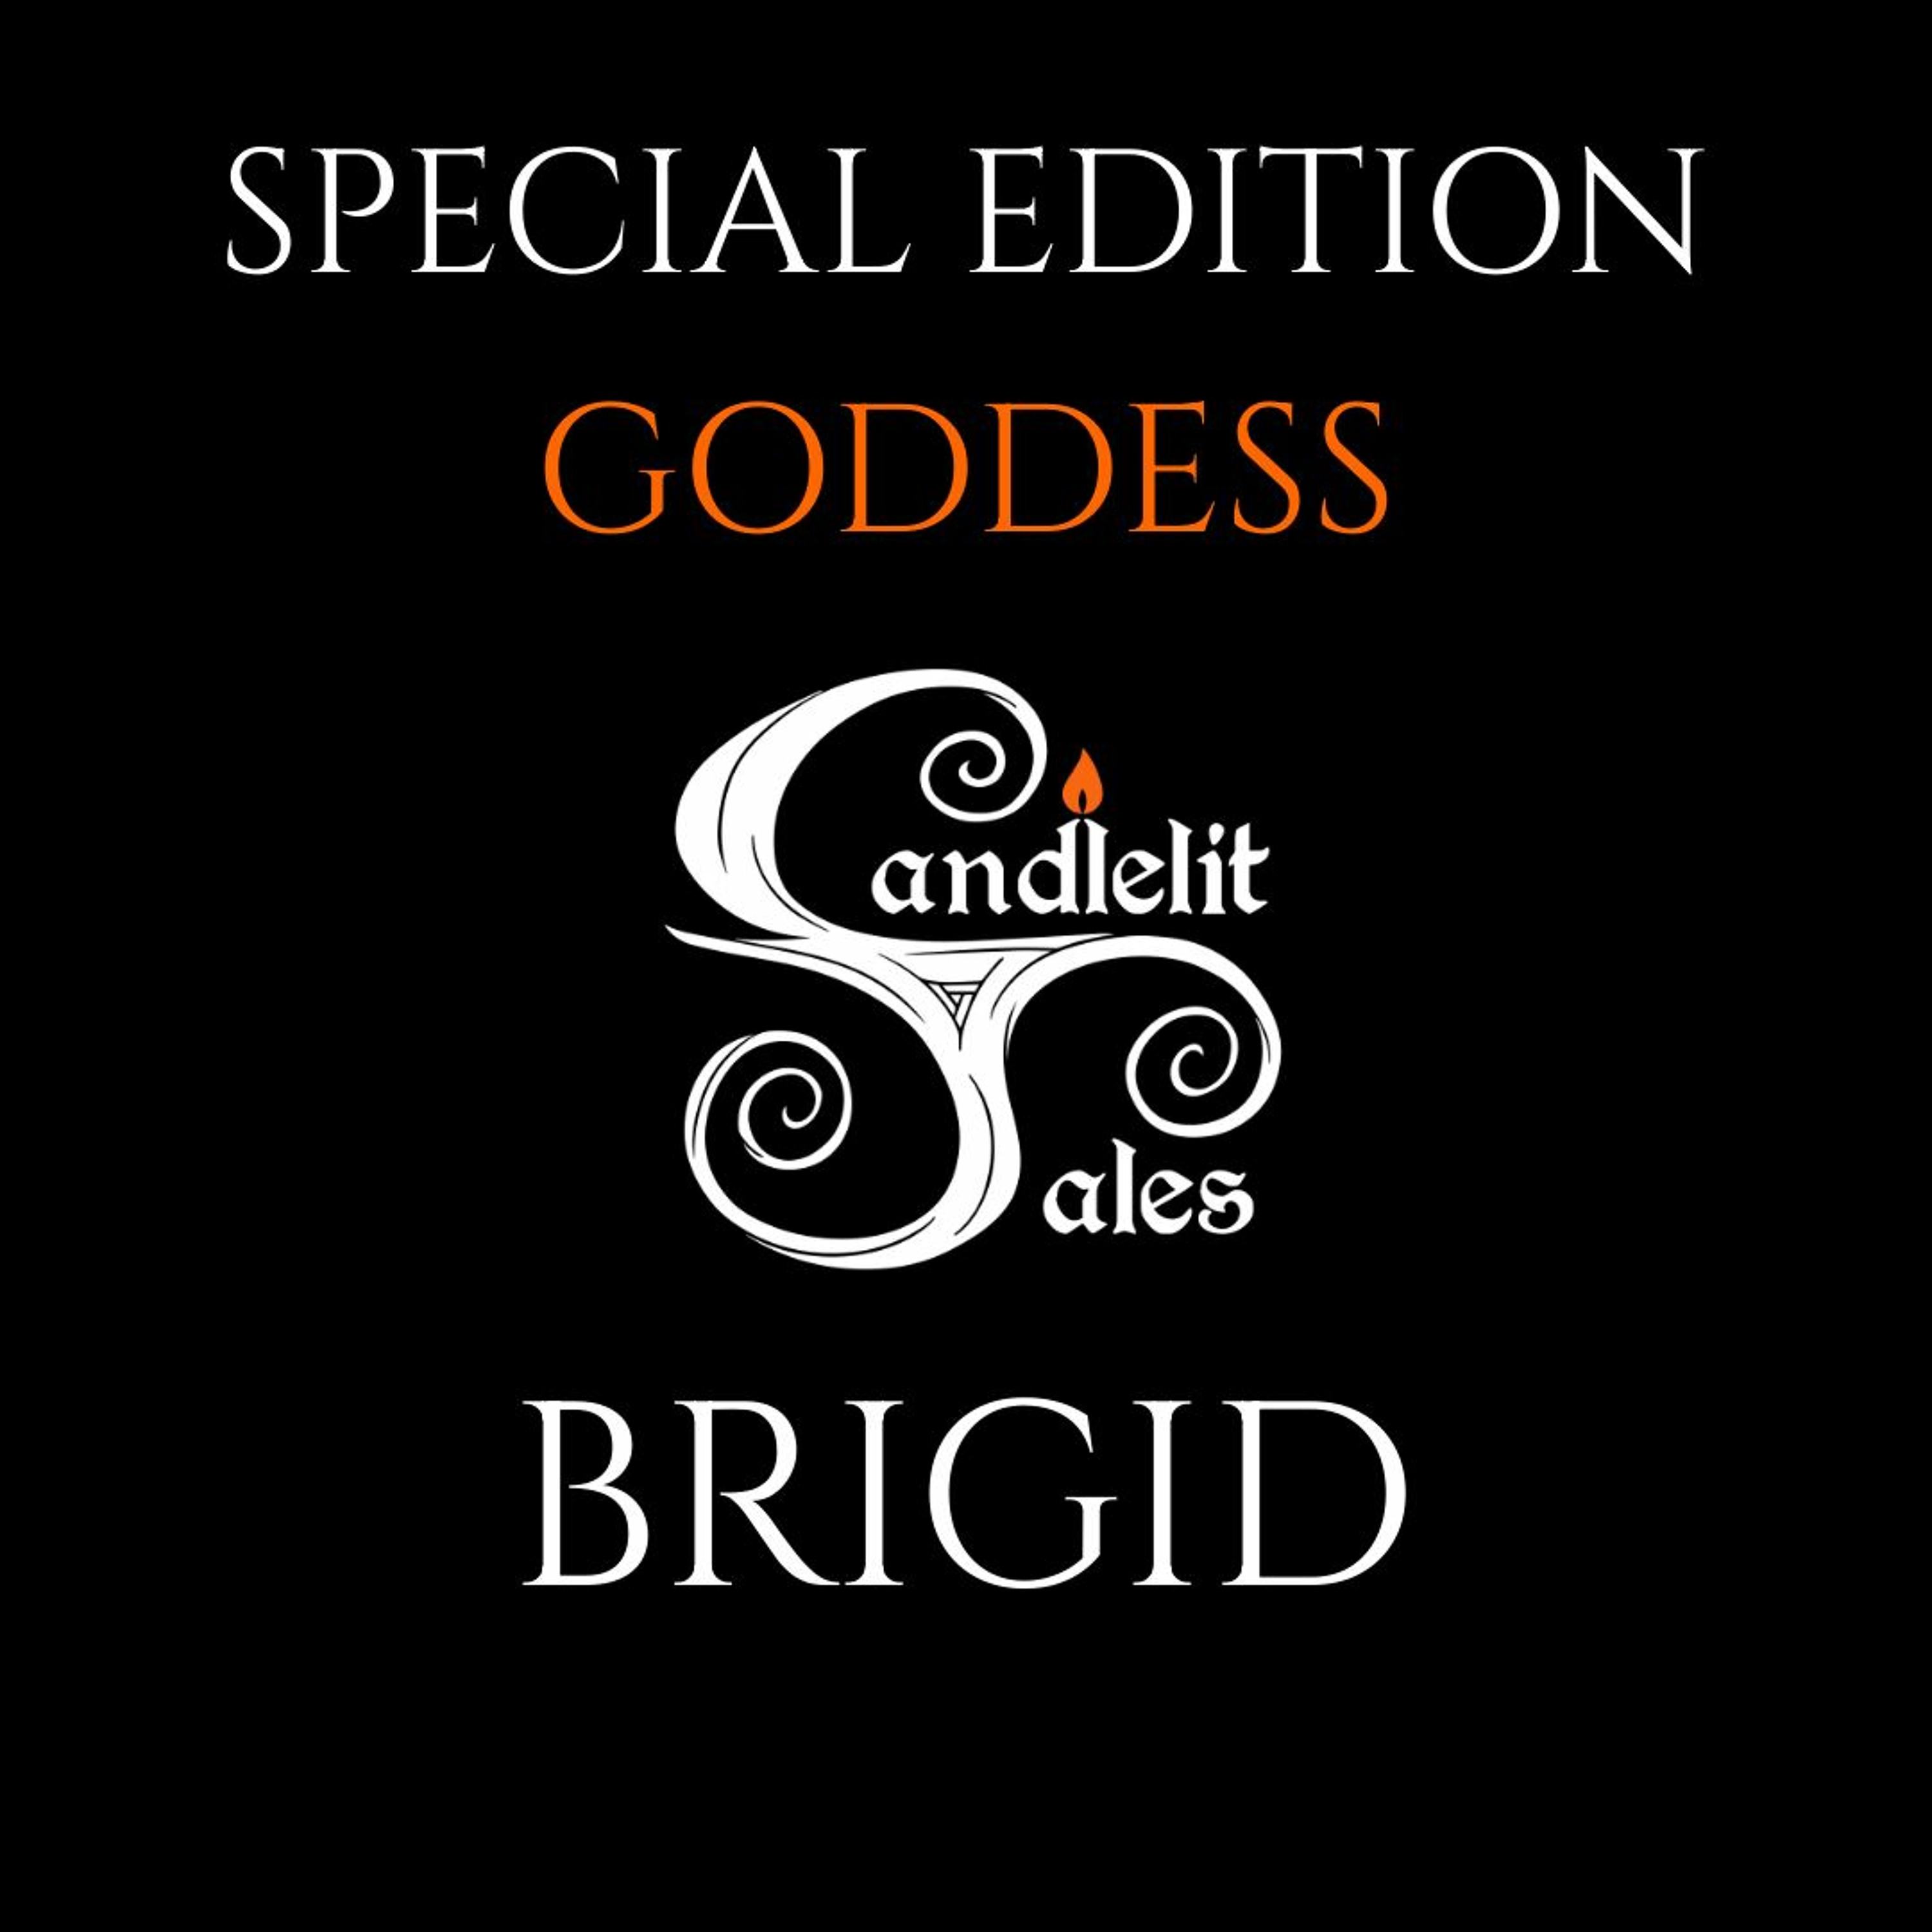 Brigid Goddess